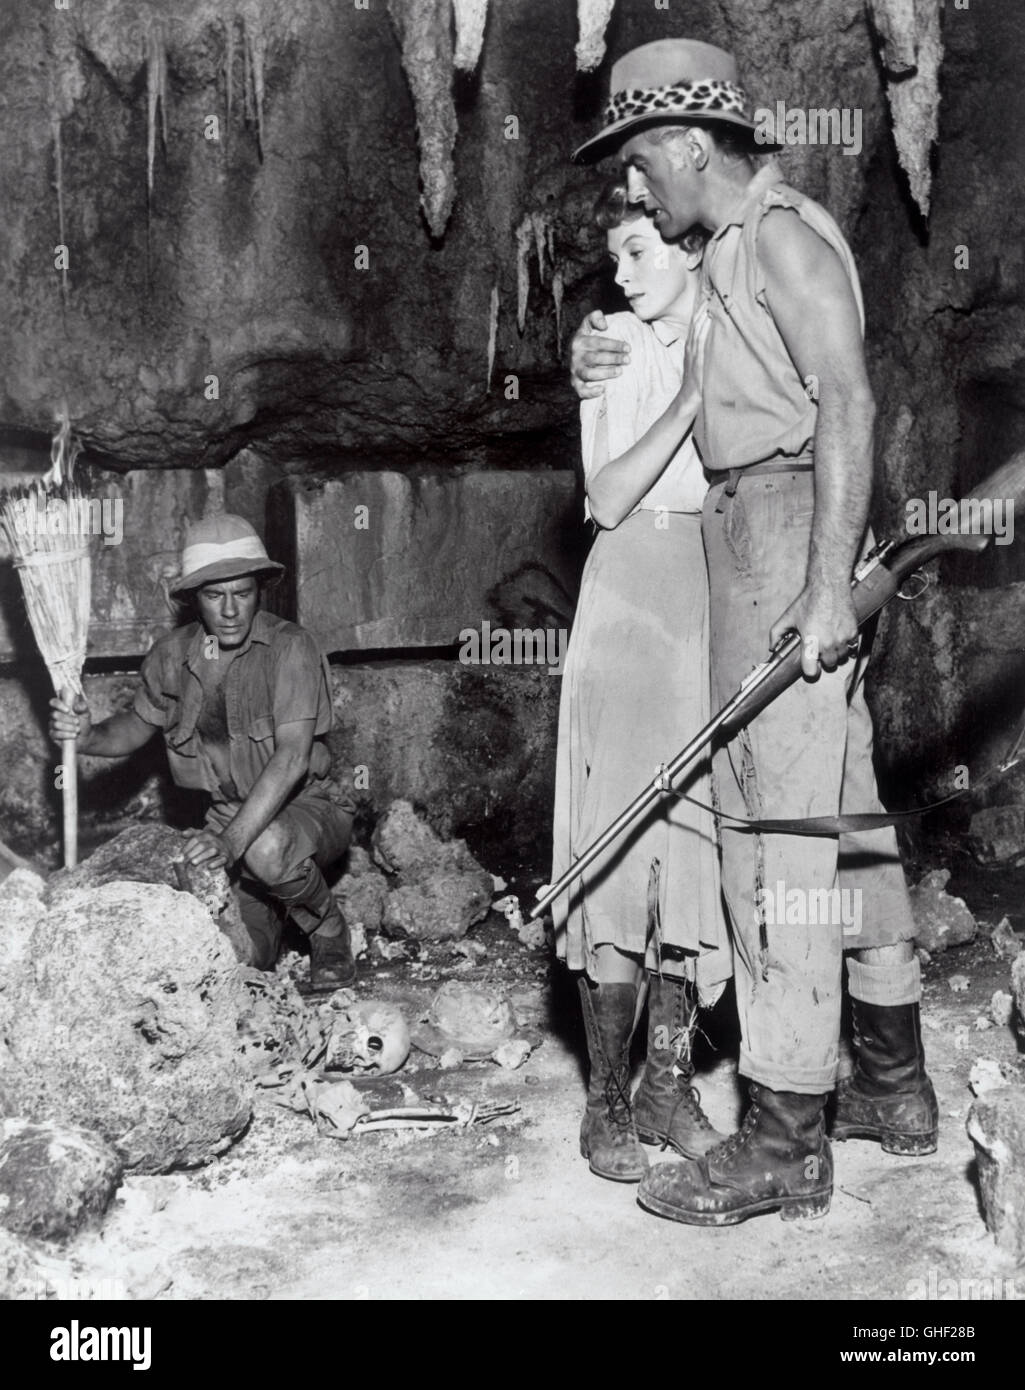 König SALOMONS Minen USA 1950 C. Bennett, A. Marton RICHARD CARLSON,  DEBORAH KERR, STEWART GRANGER-Regie: C. Bennett, A. Marton Stockfotografie  - Alamy